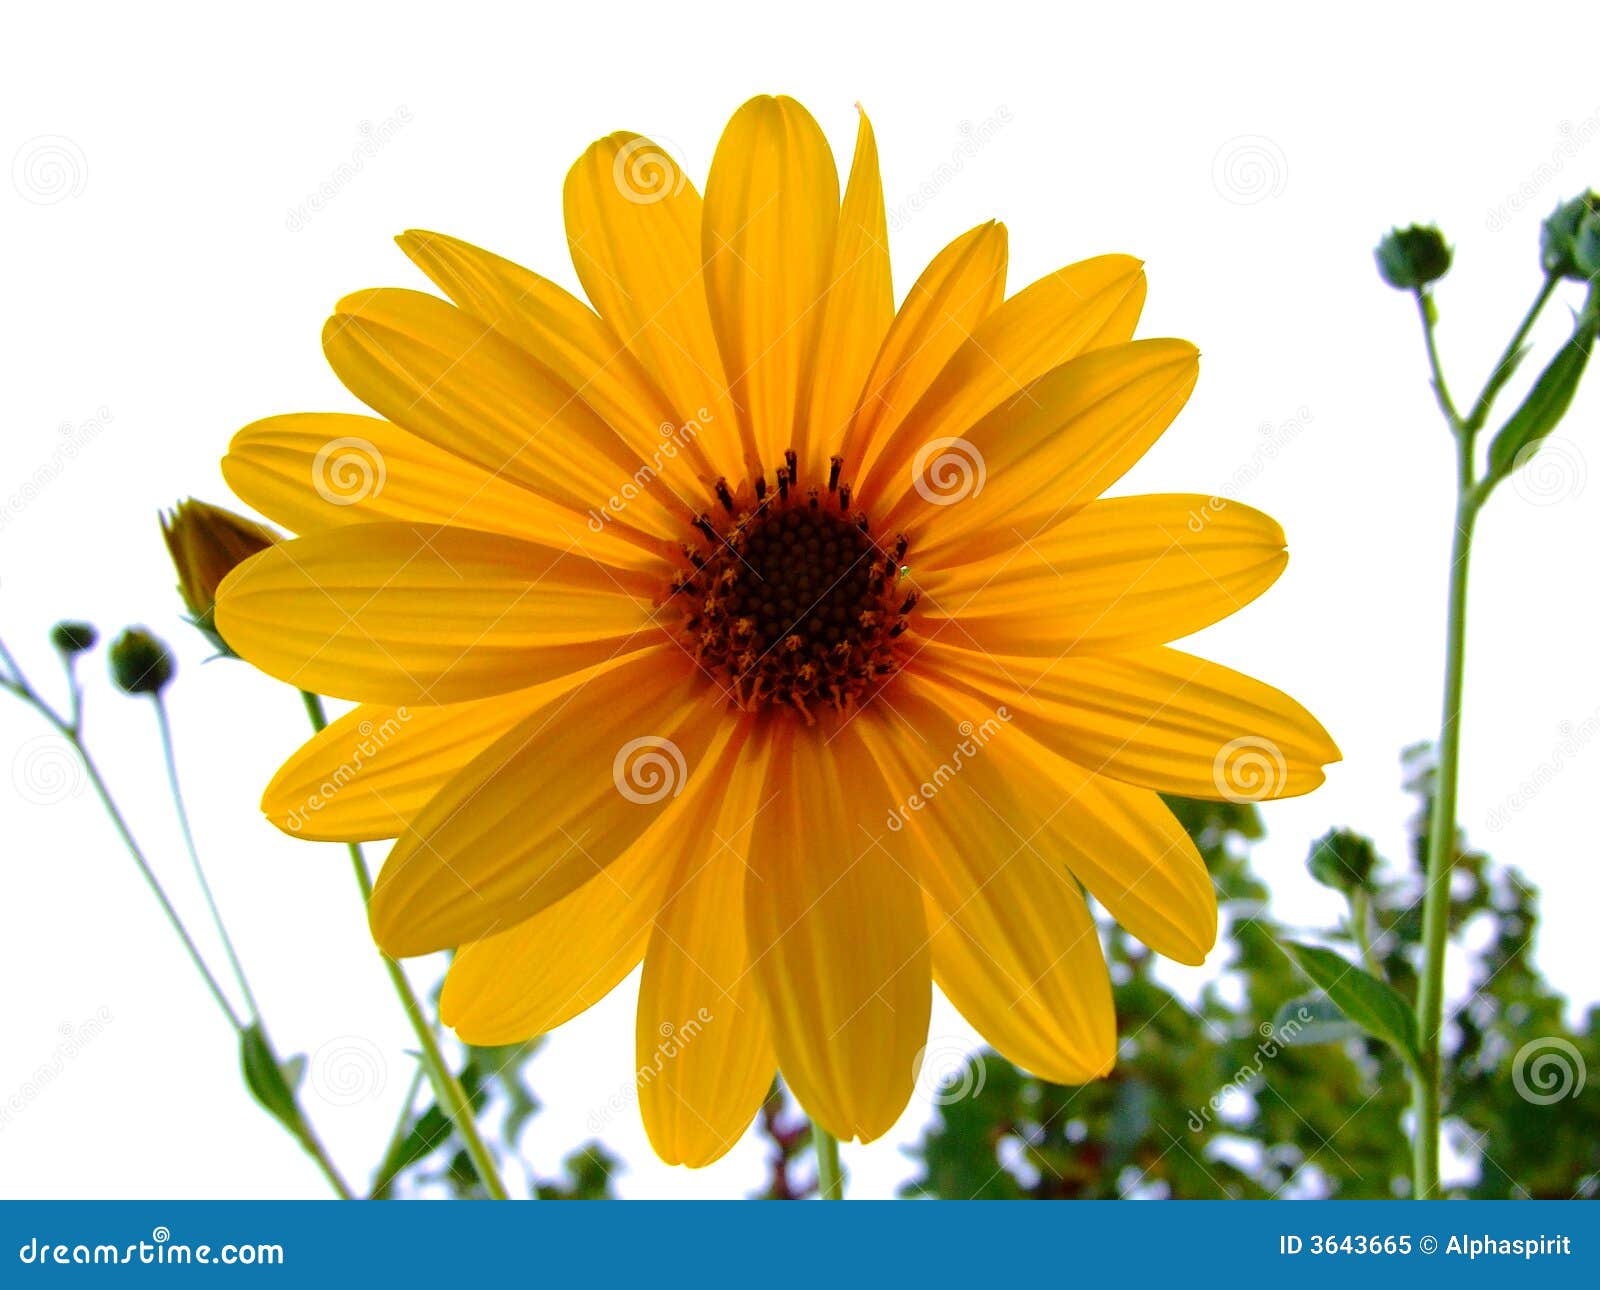 yellow flower, dalia